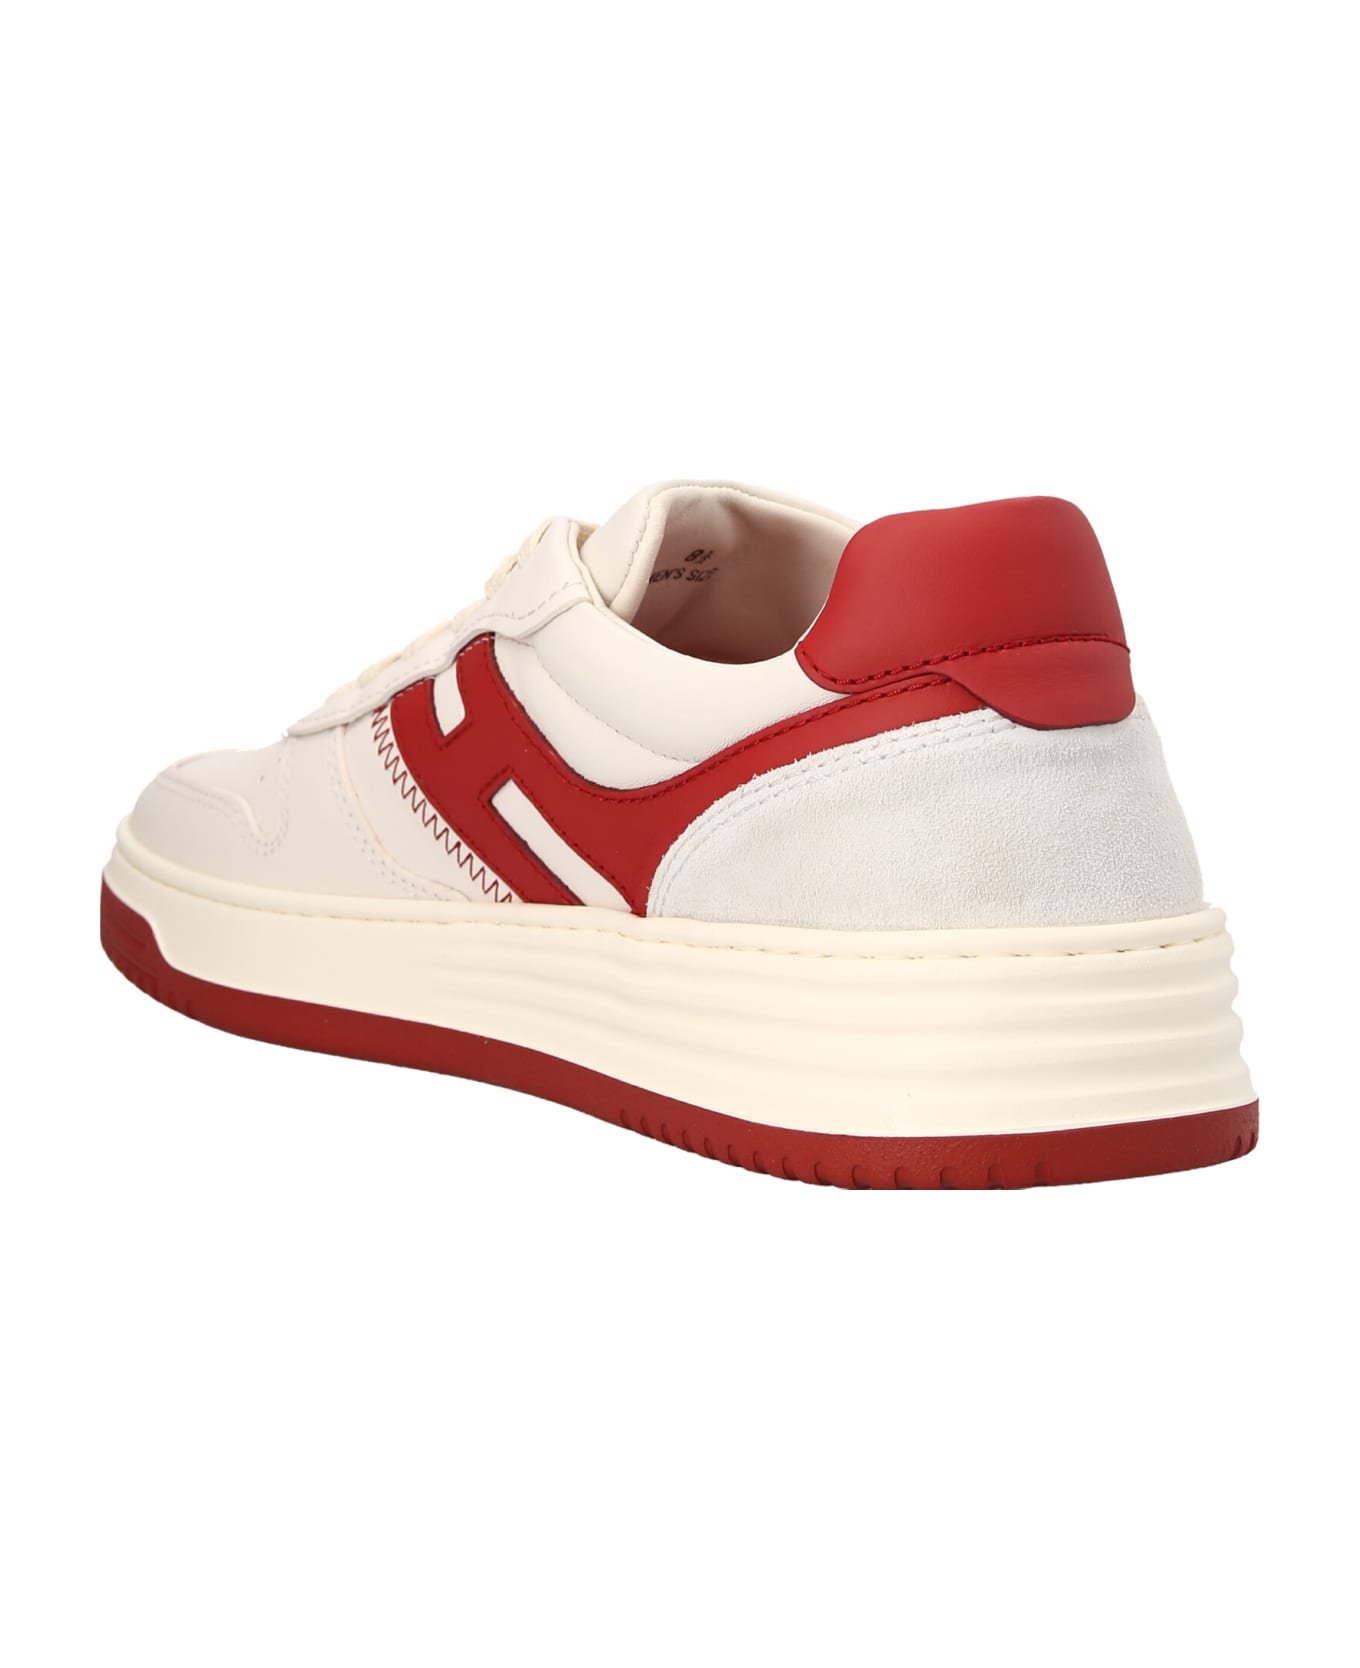 Hogan 'h630' Sneakers - Red